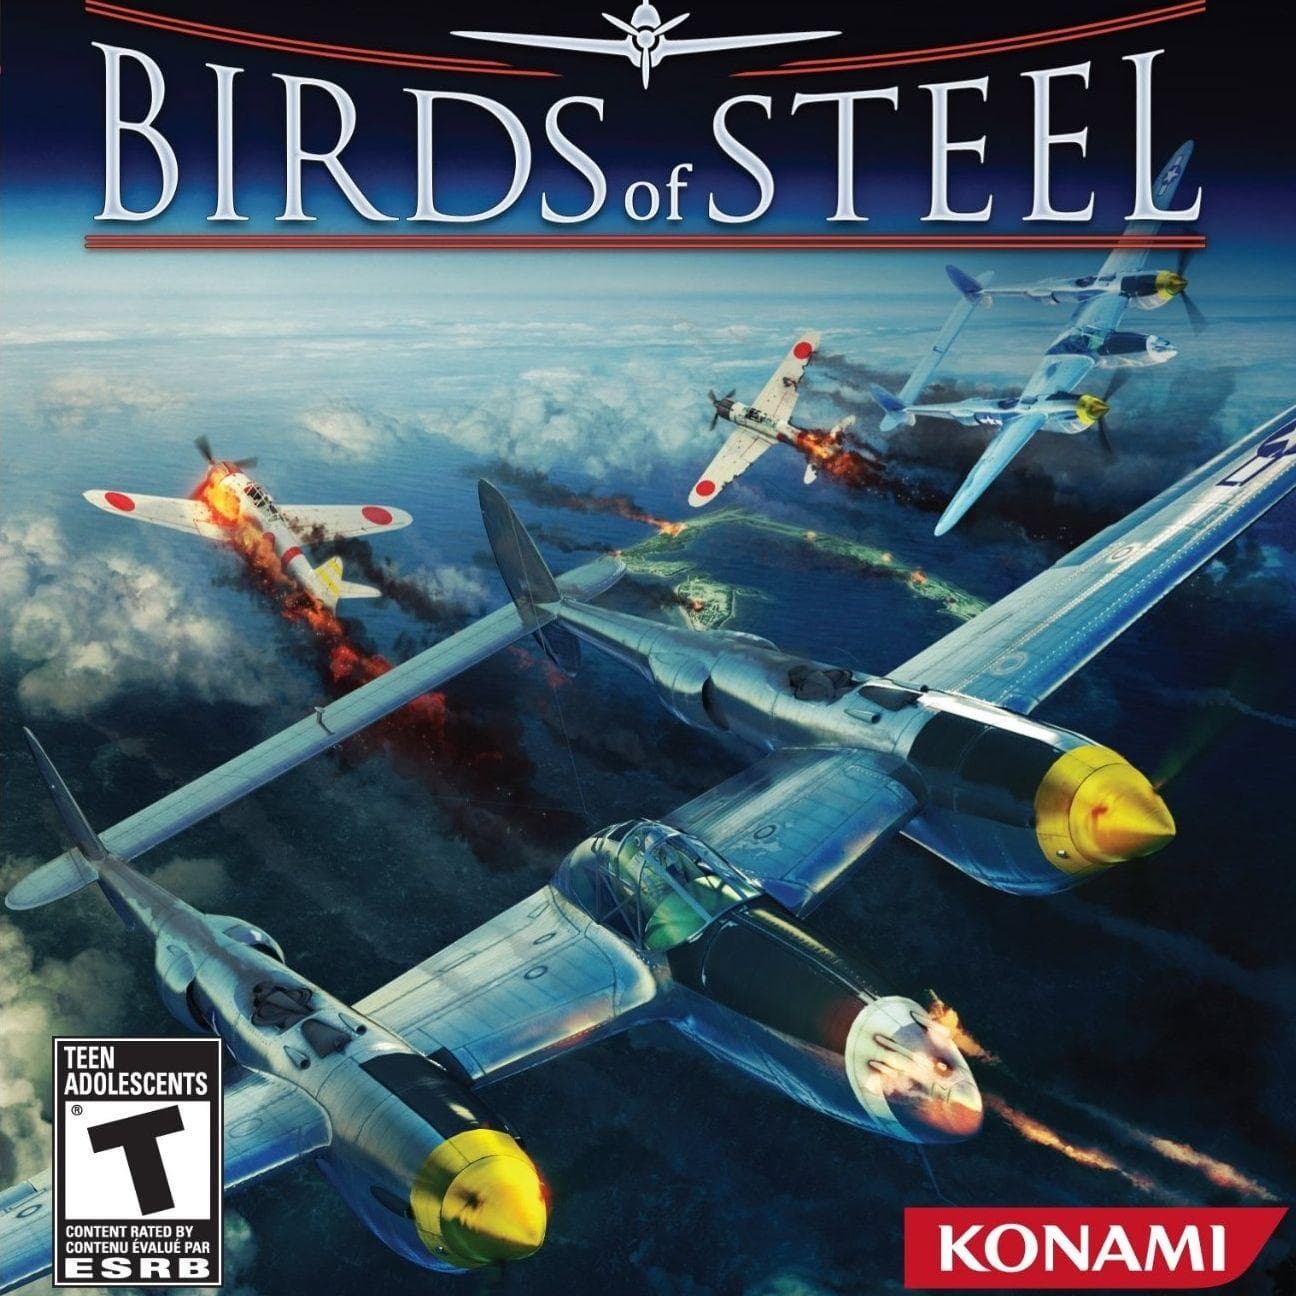 download birds of steel playstation 3